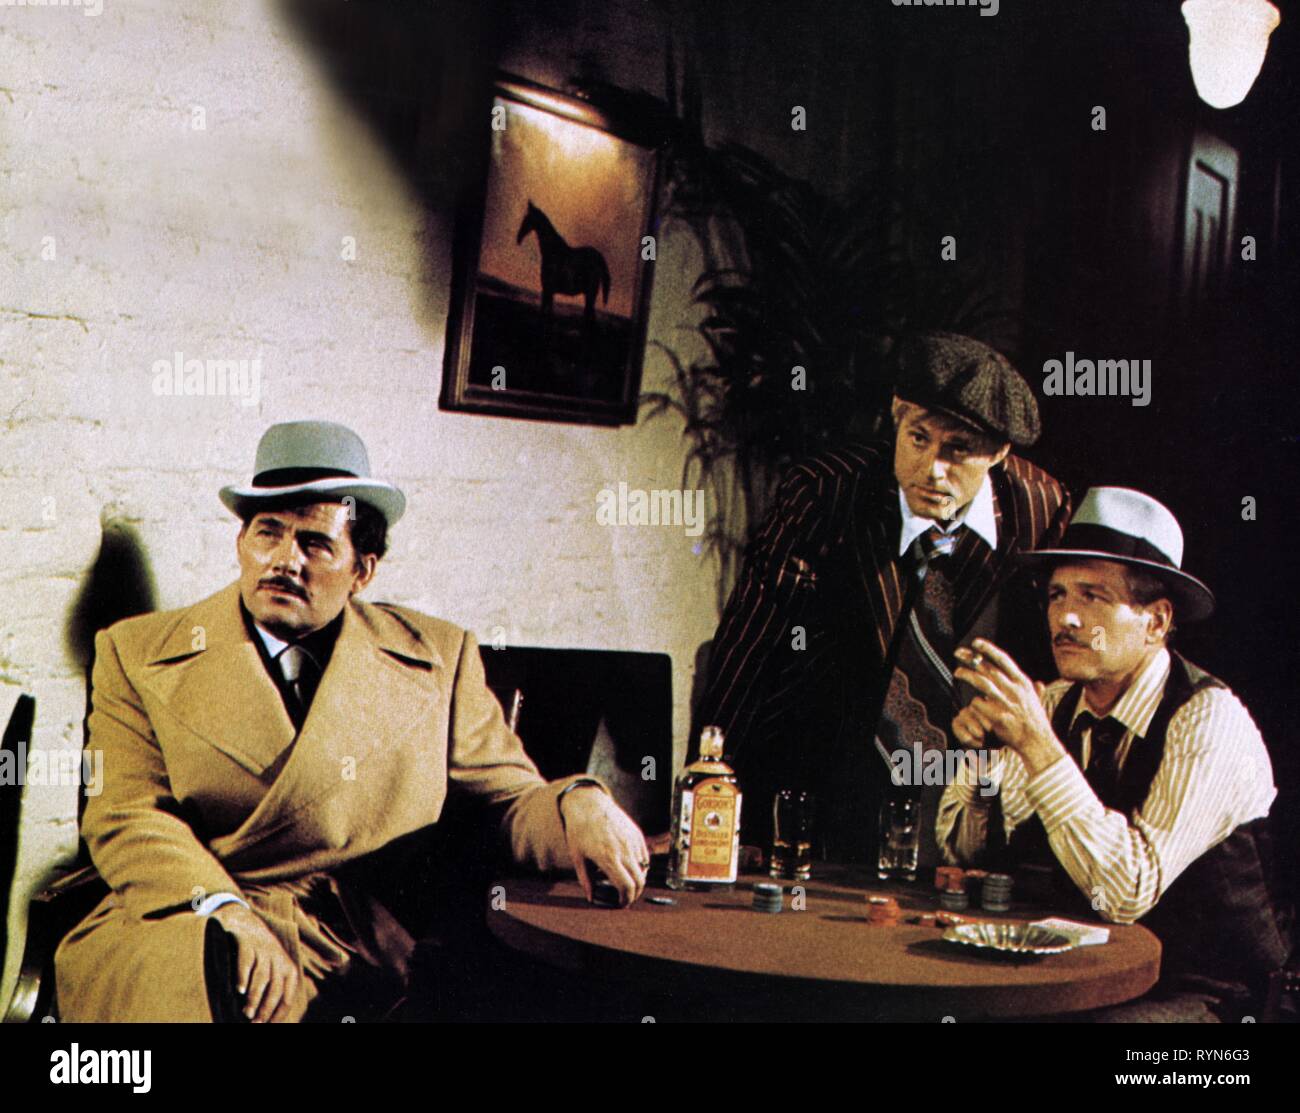 SHAW, Redford, NEWMAN, L'ARNAQUE, 1973 Banque D'Images